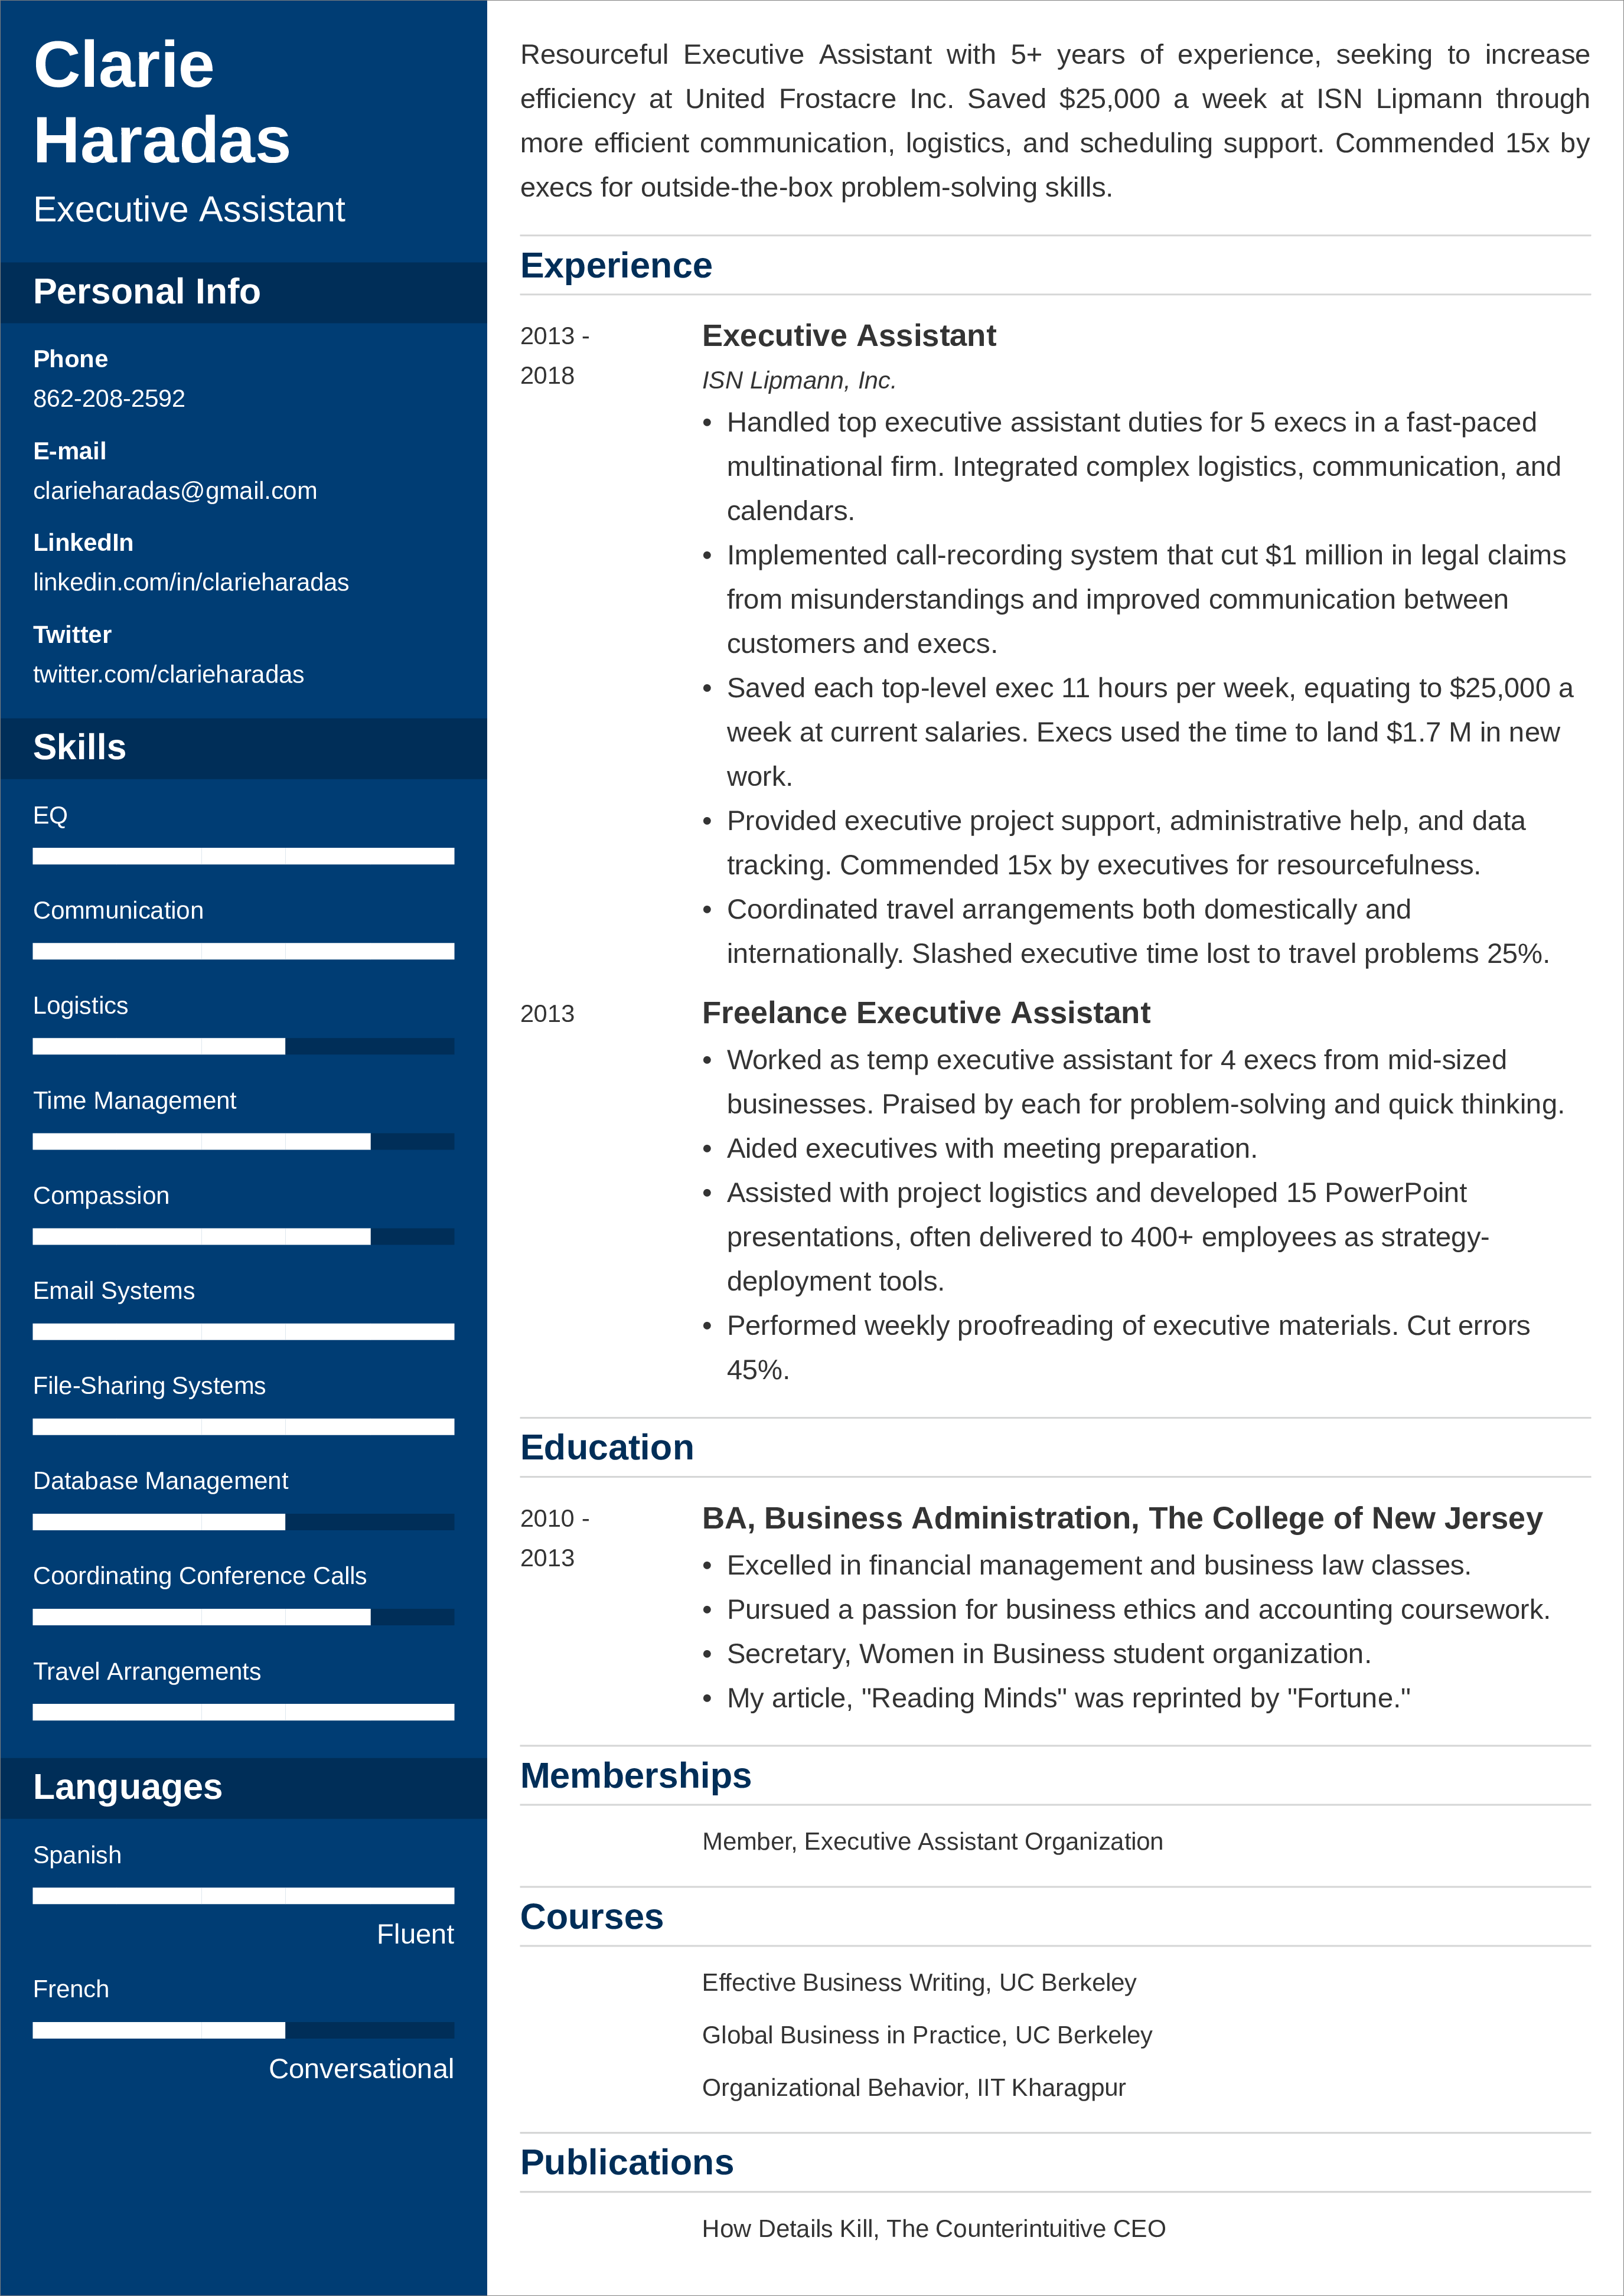 sample resume example